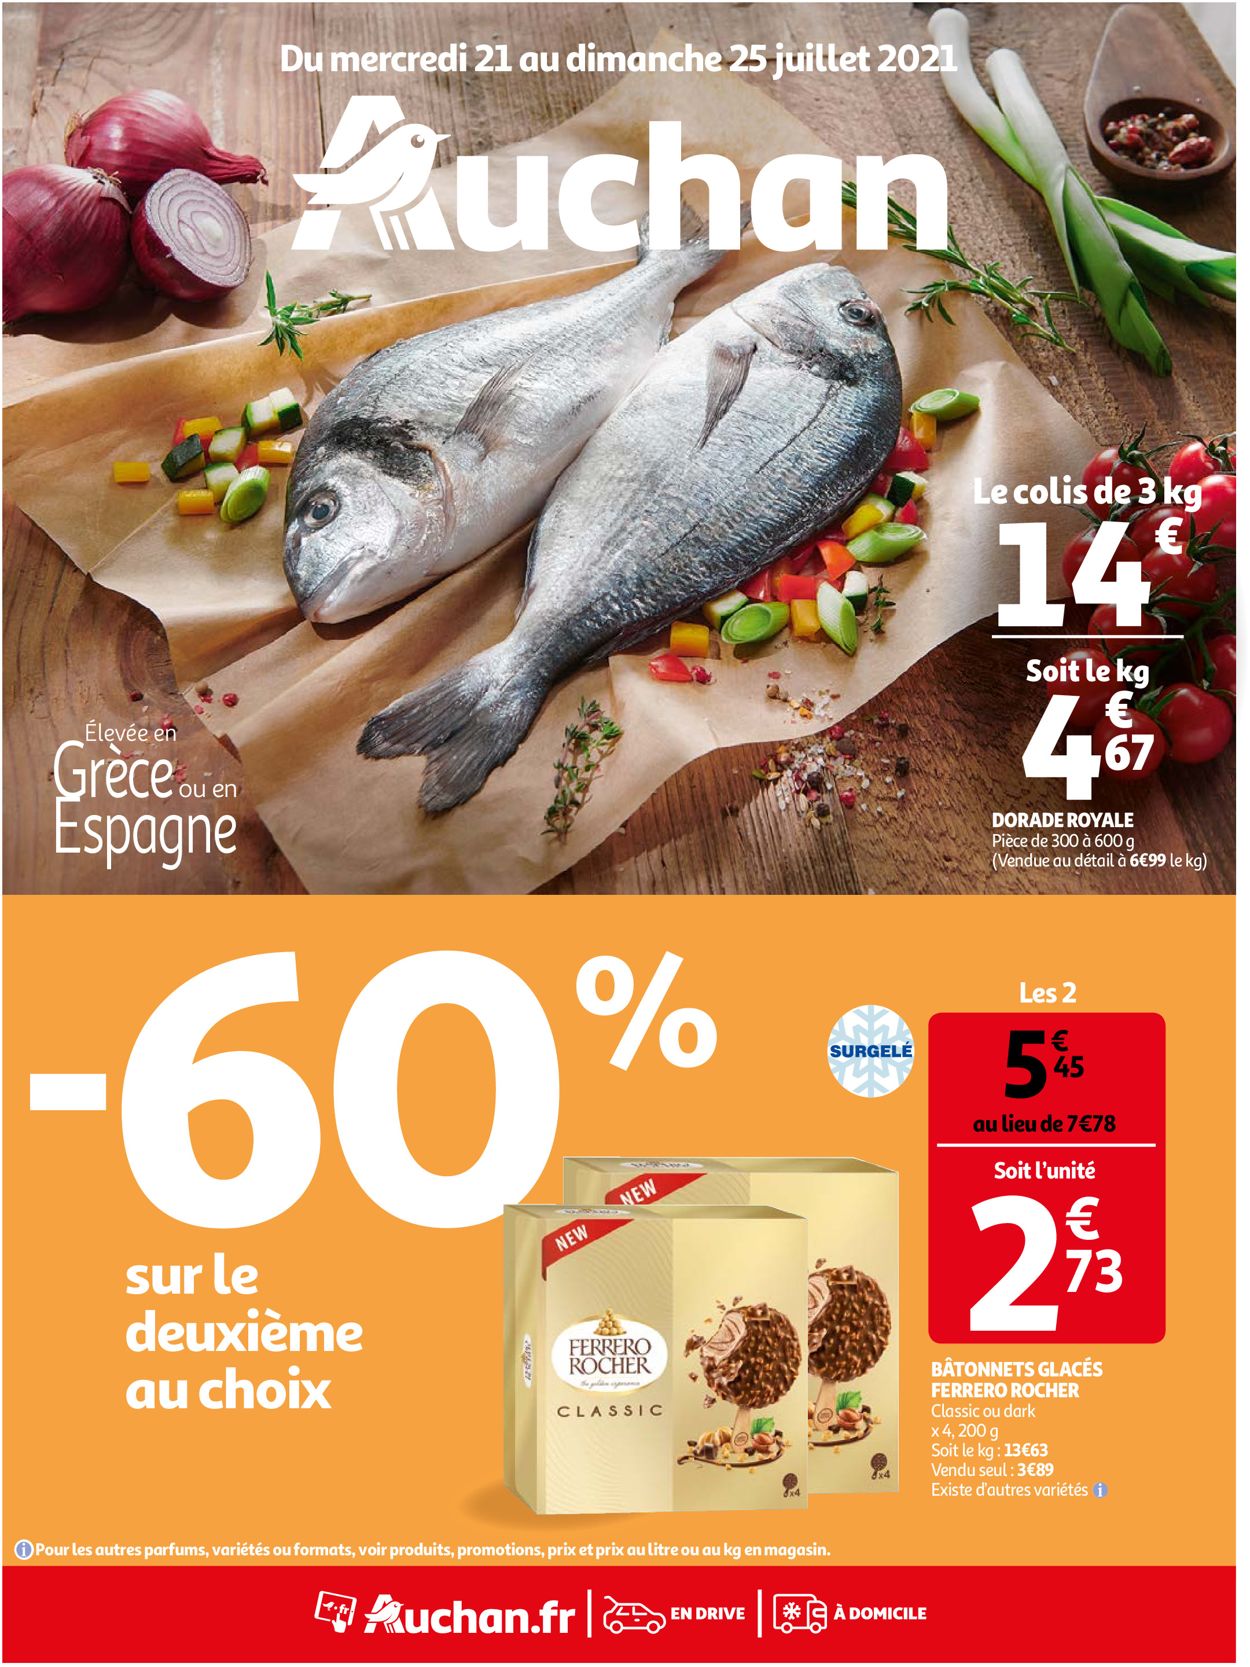 Auchan Catalogue - 21.07-25.07.2021